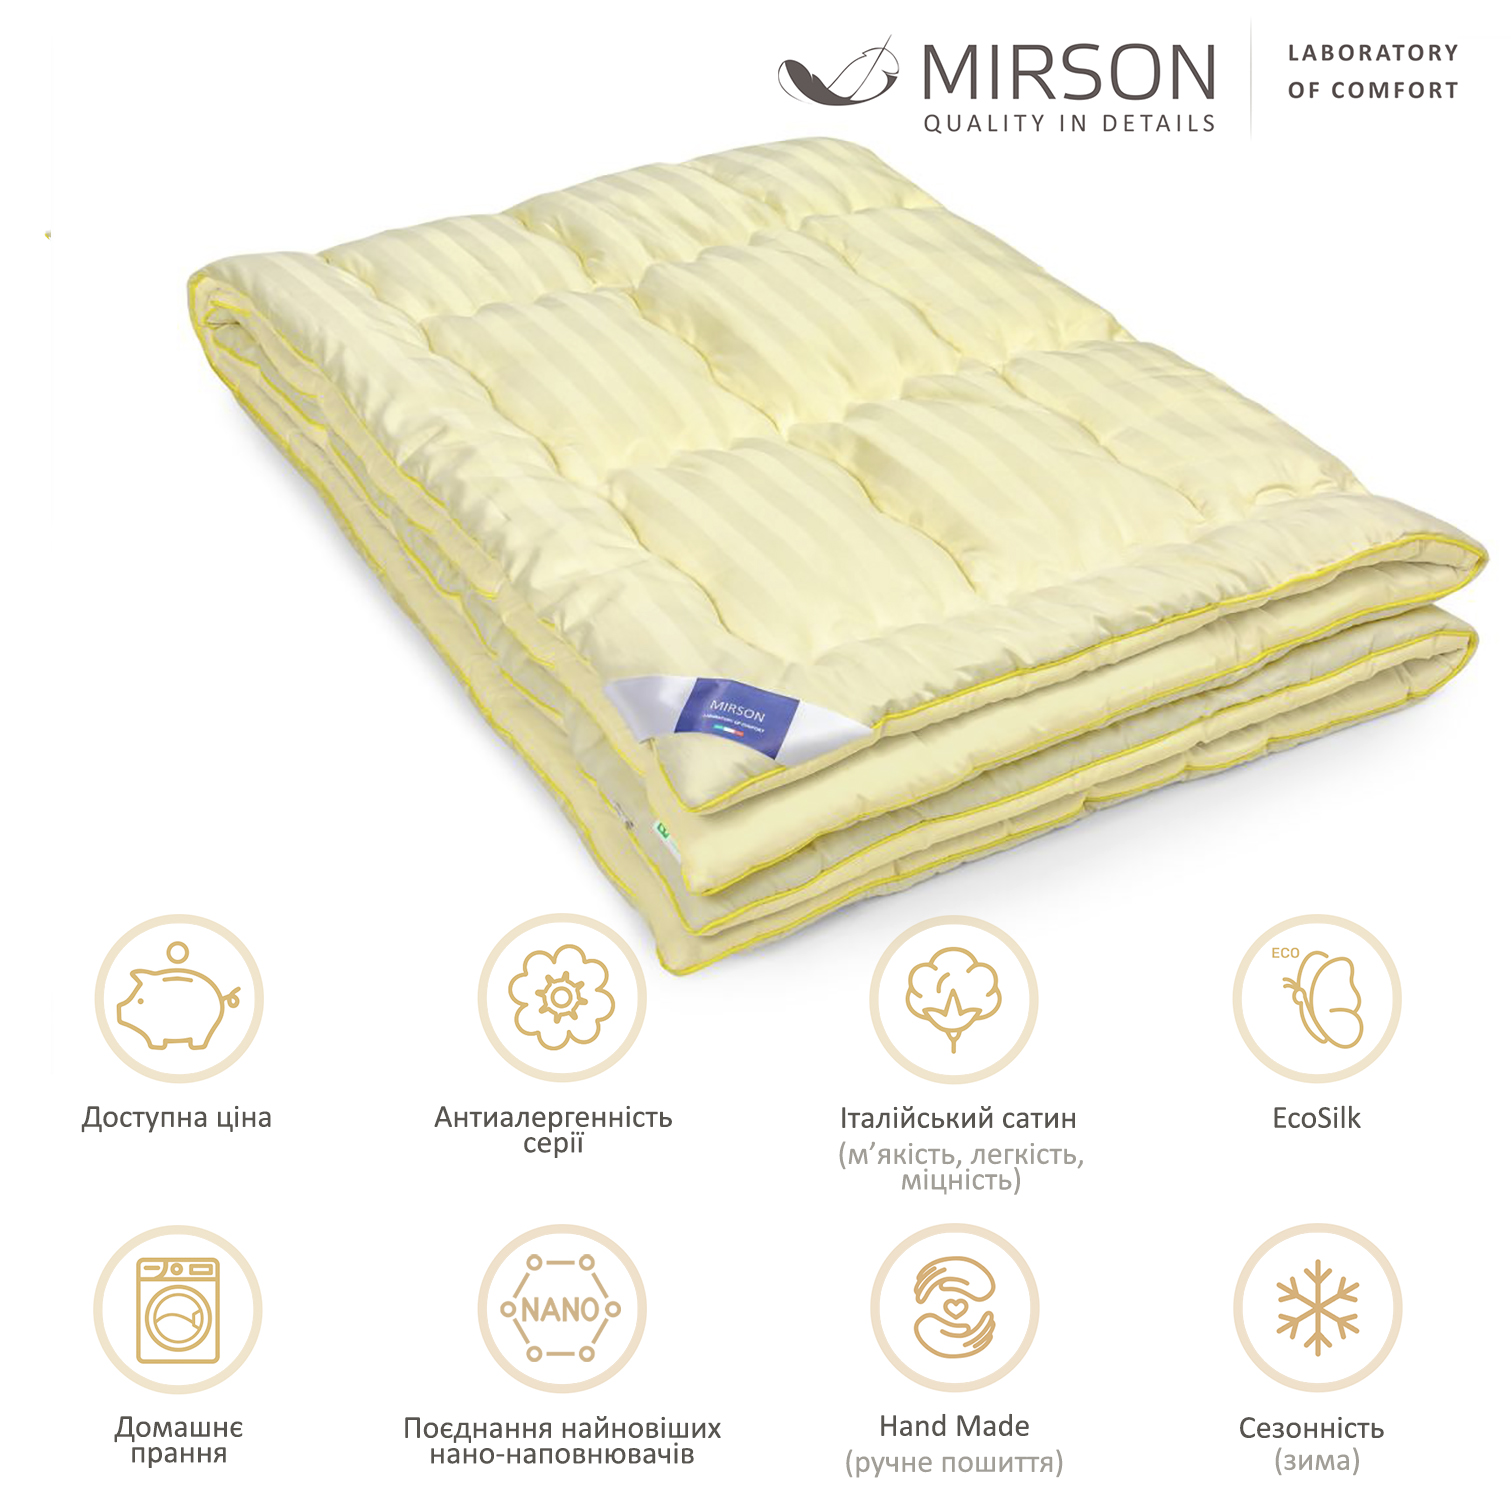 Одеяло антиаллергенное MirSon Carmela Hand Made EcoSilk №068, зимнее, 172x205 см, светло-желтое - фото 4